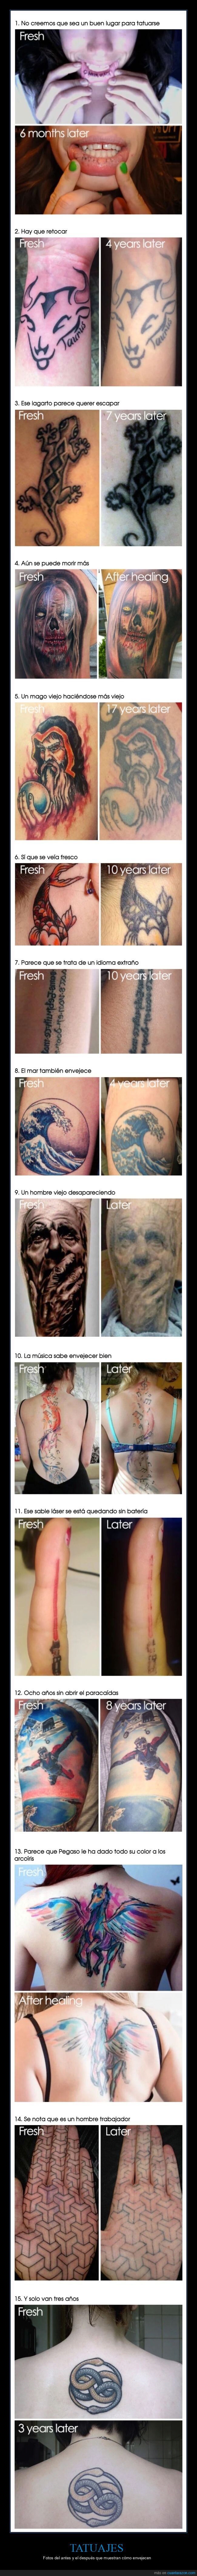 tatuajes,antes,después,envejecer